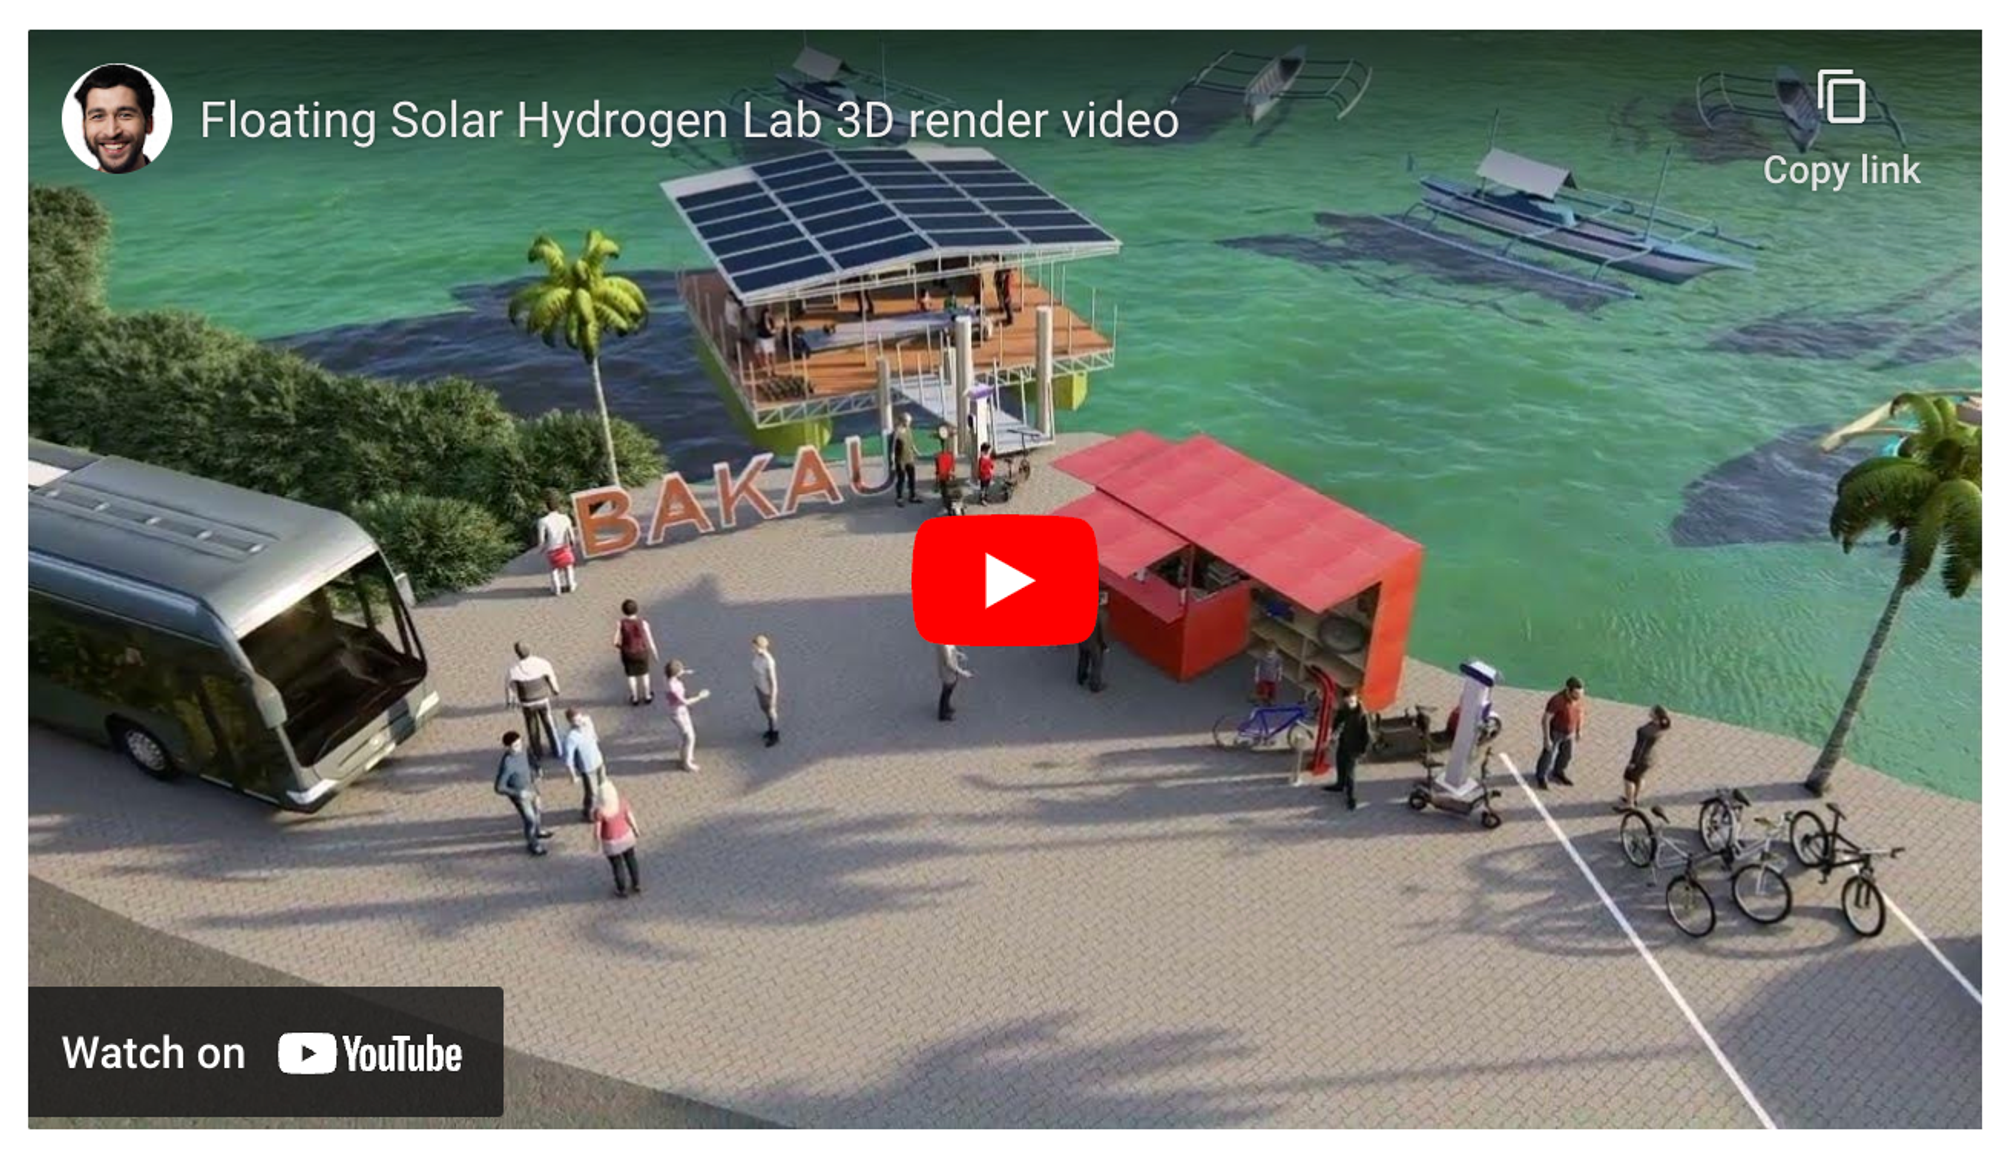 3D video render of the floating solar hydrogen Lab